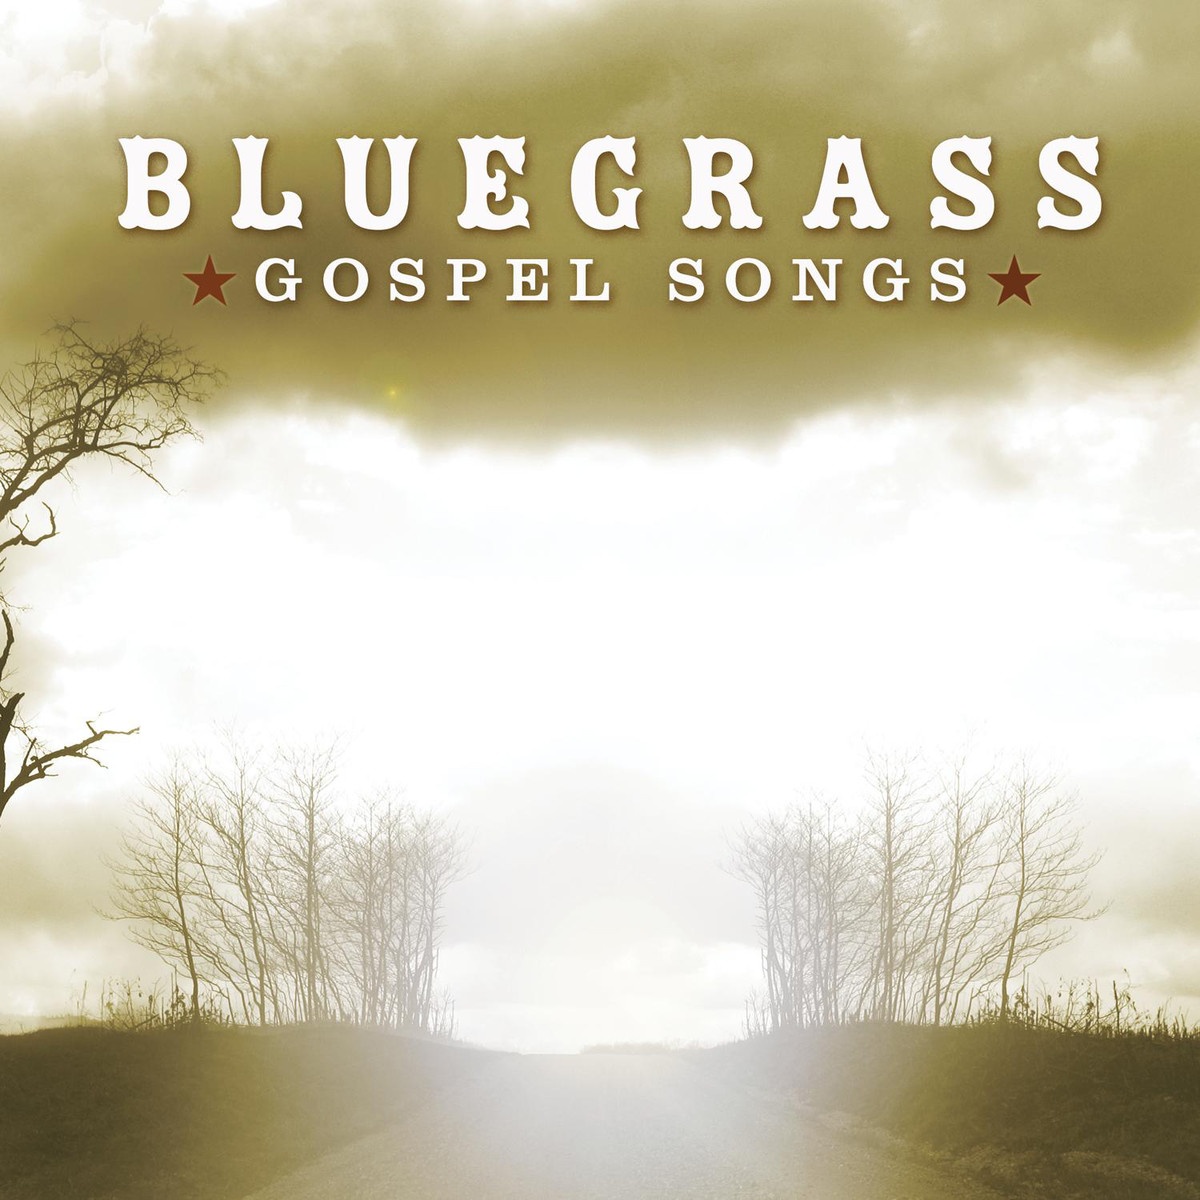 Bluegrass Gospel Songs